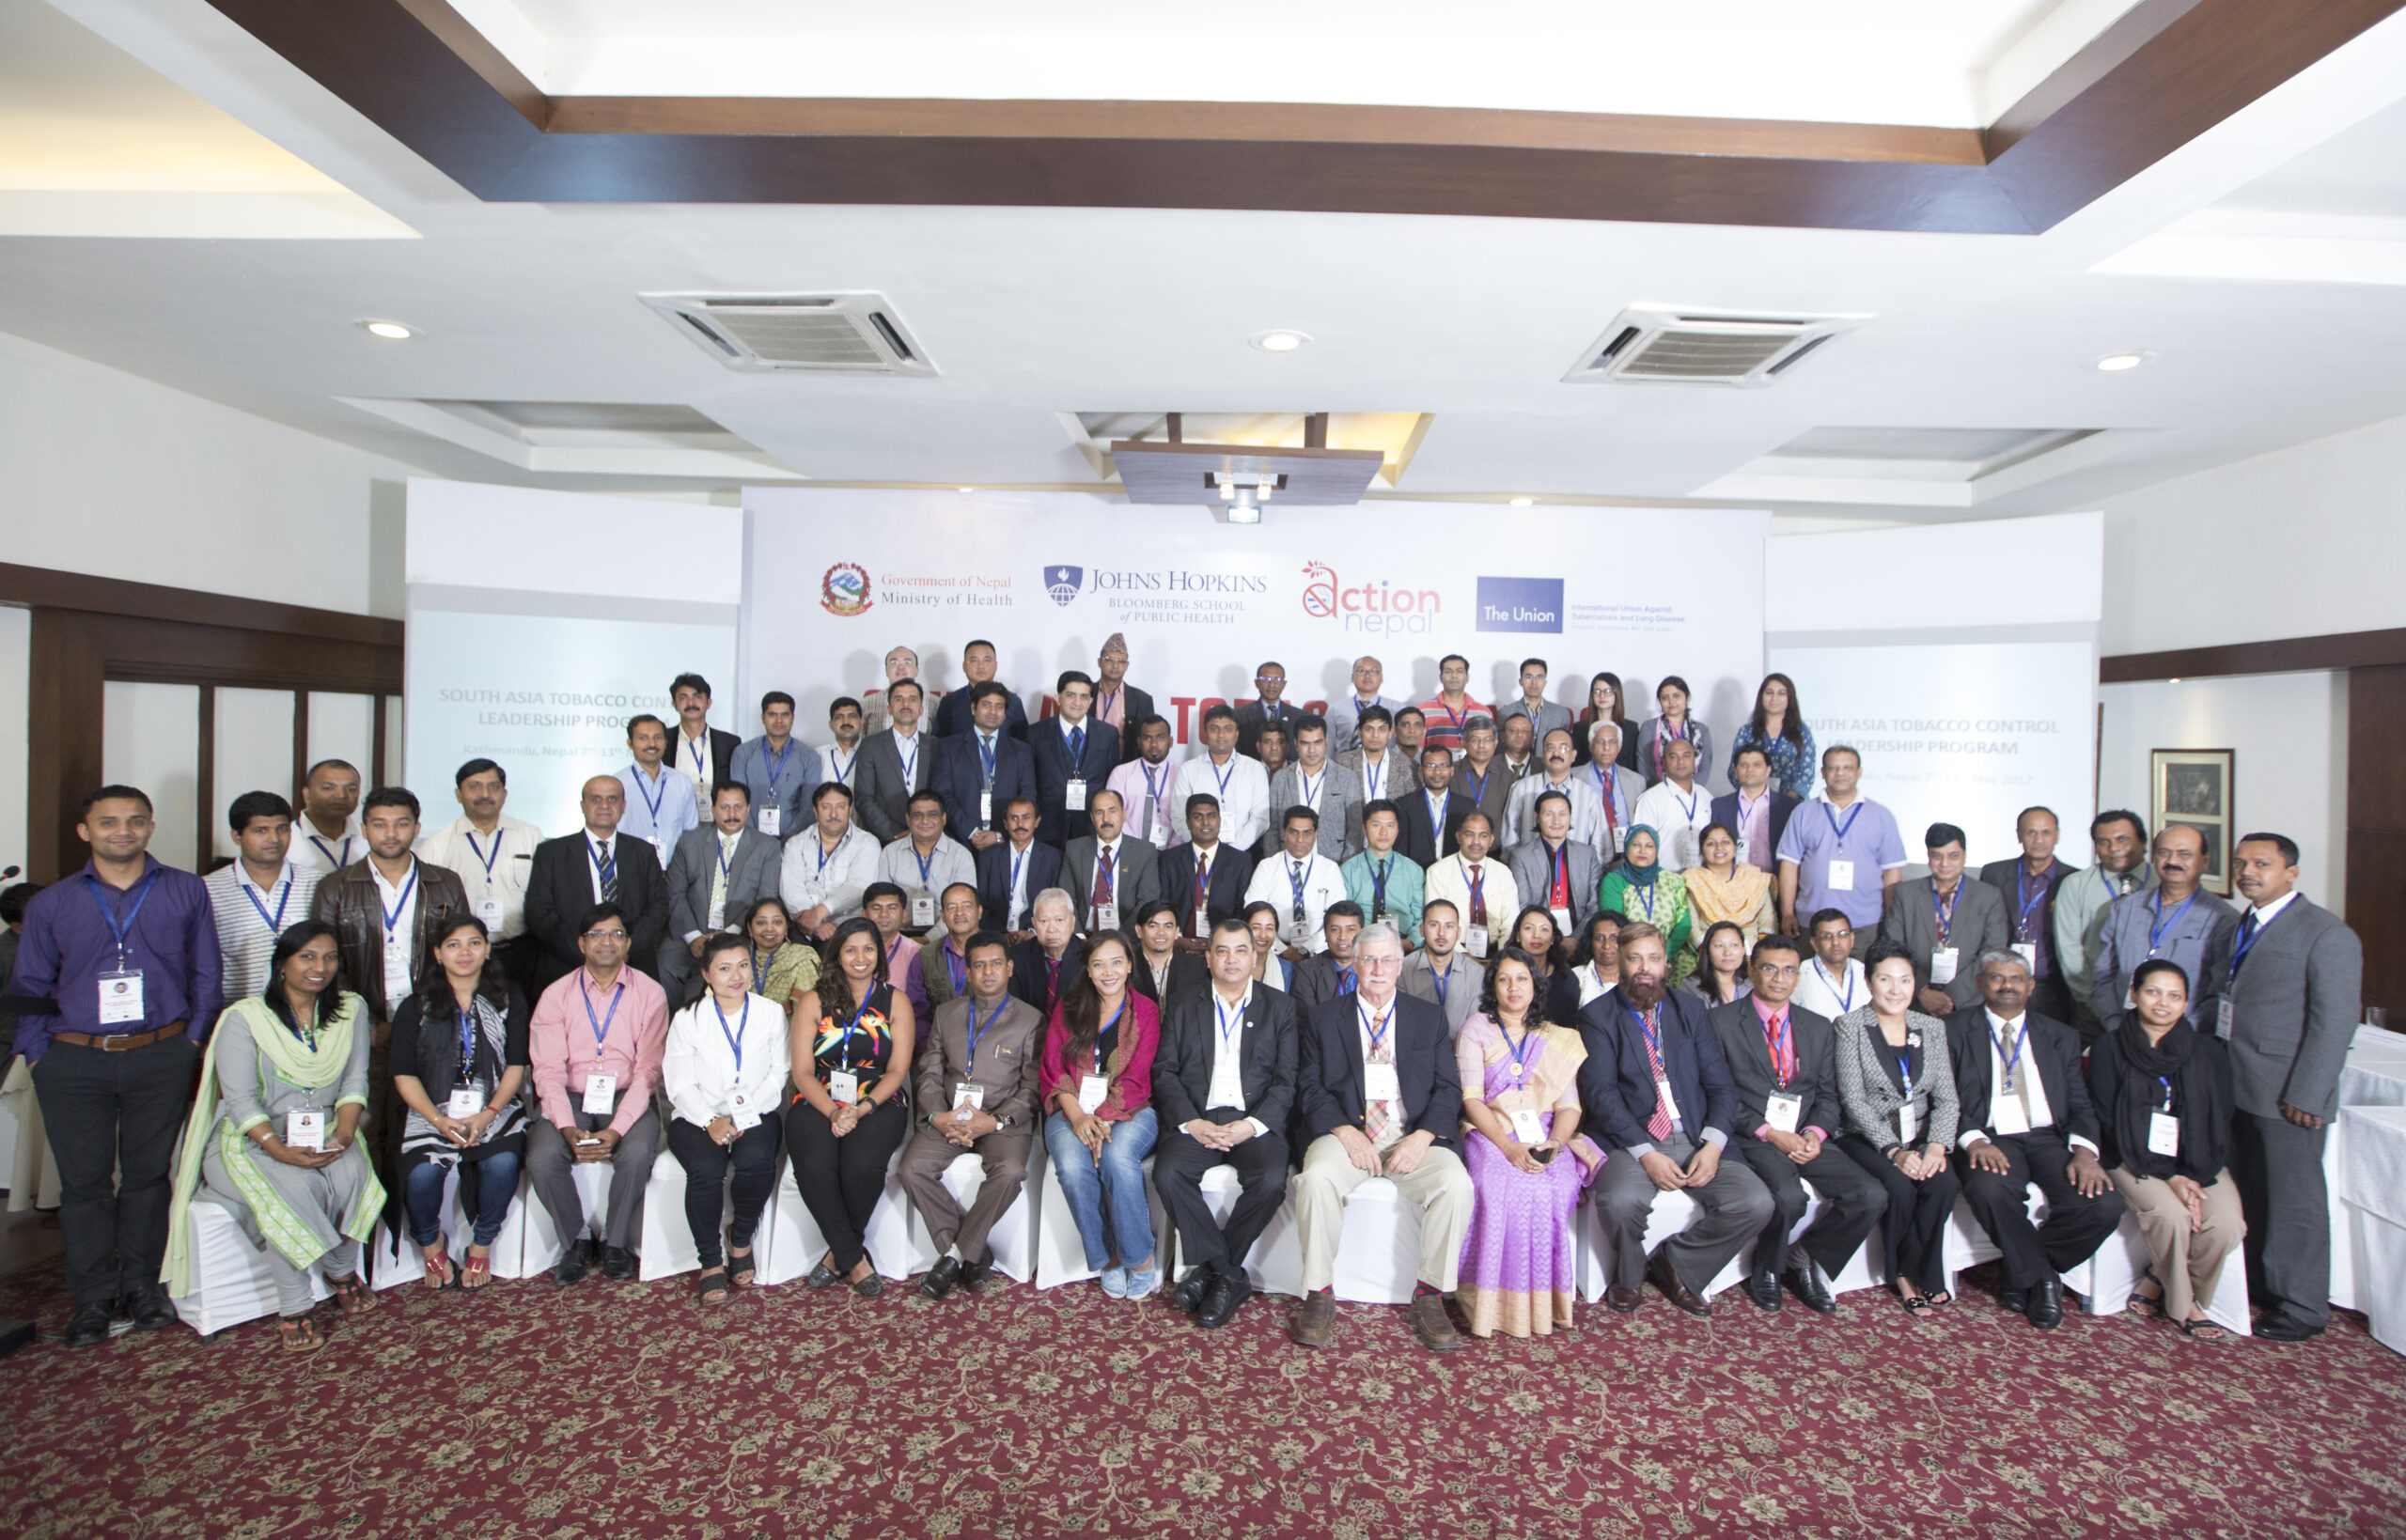 South Asia Tobacco Control Leadership Program, Kathmandu, Nepal